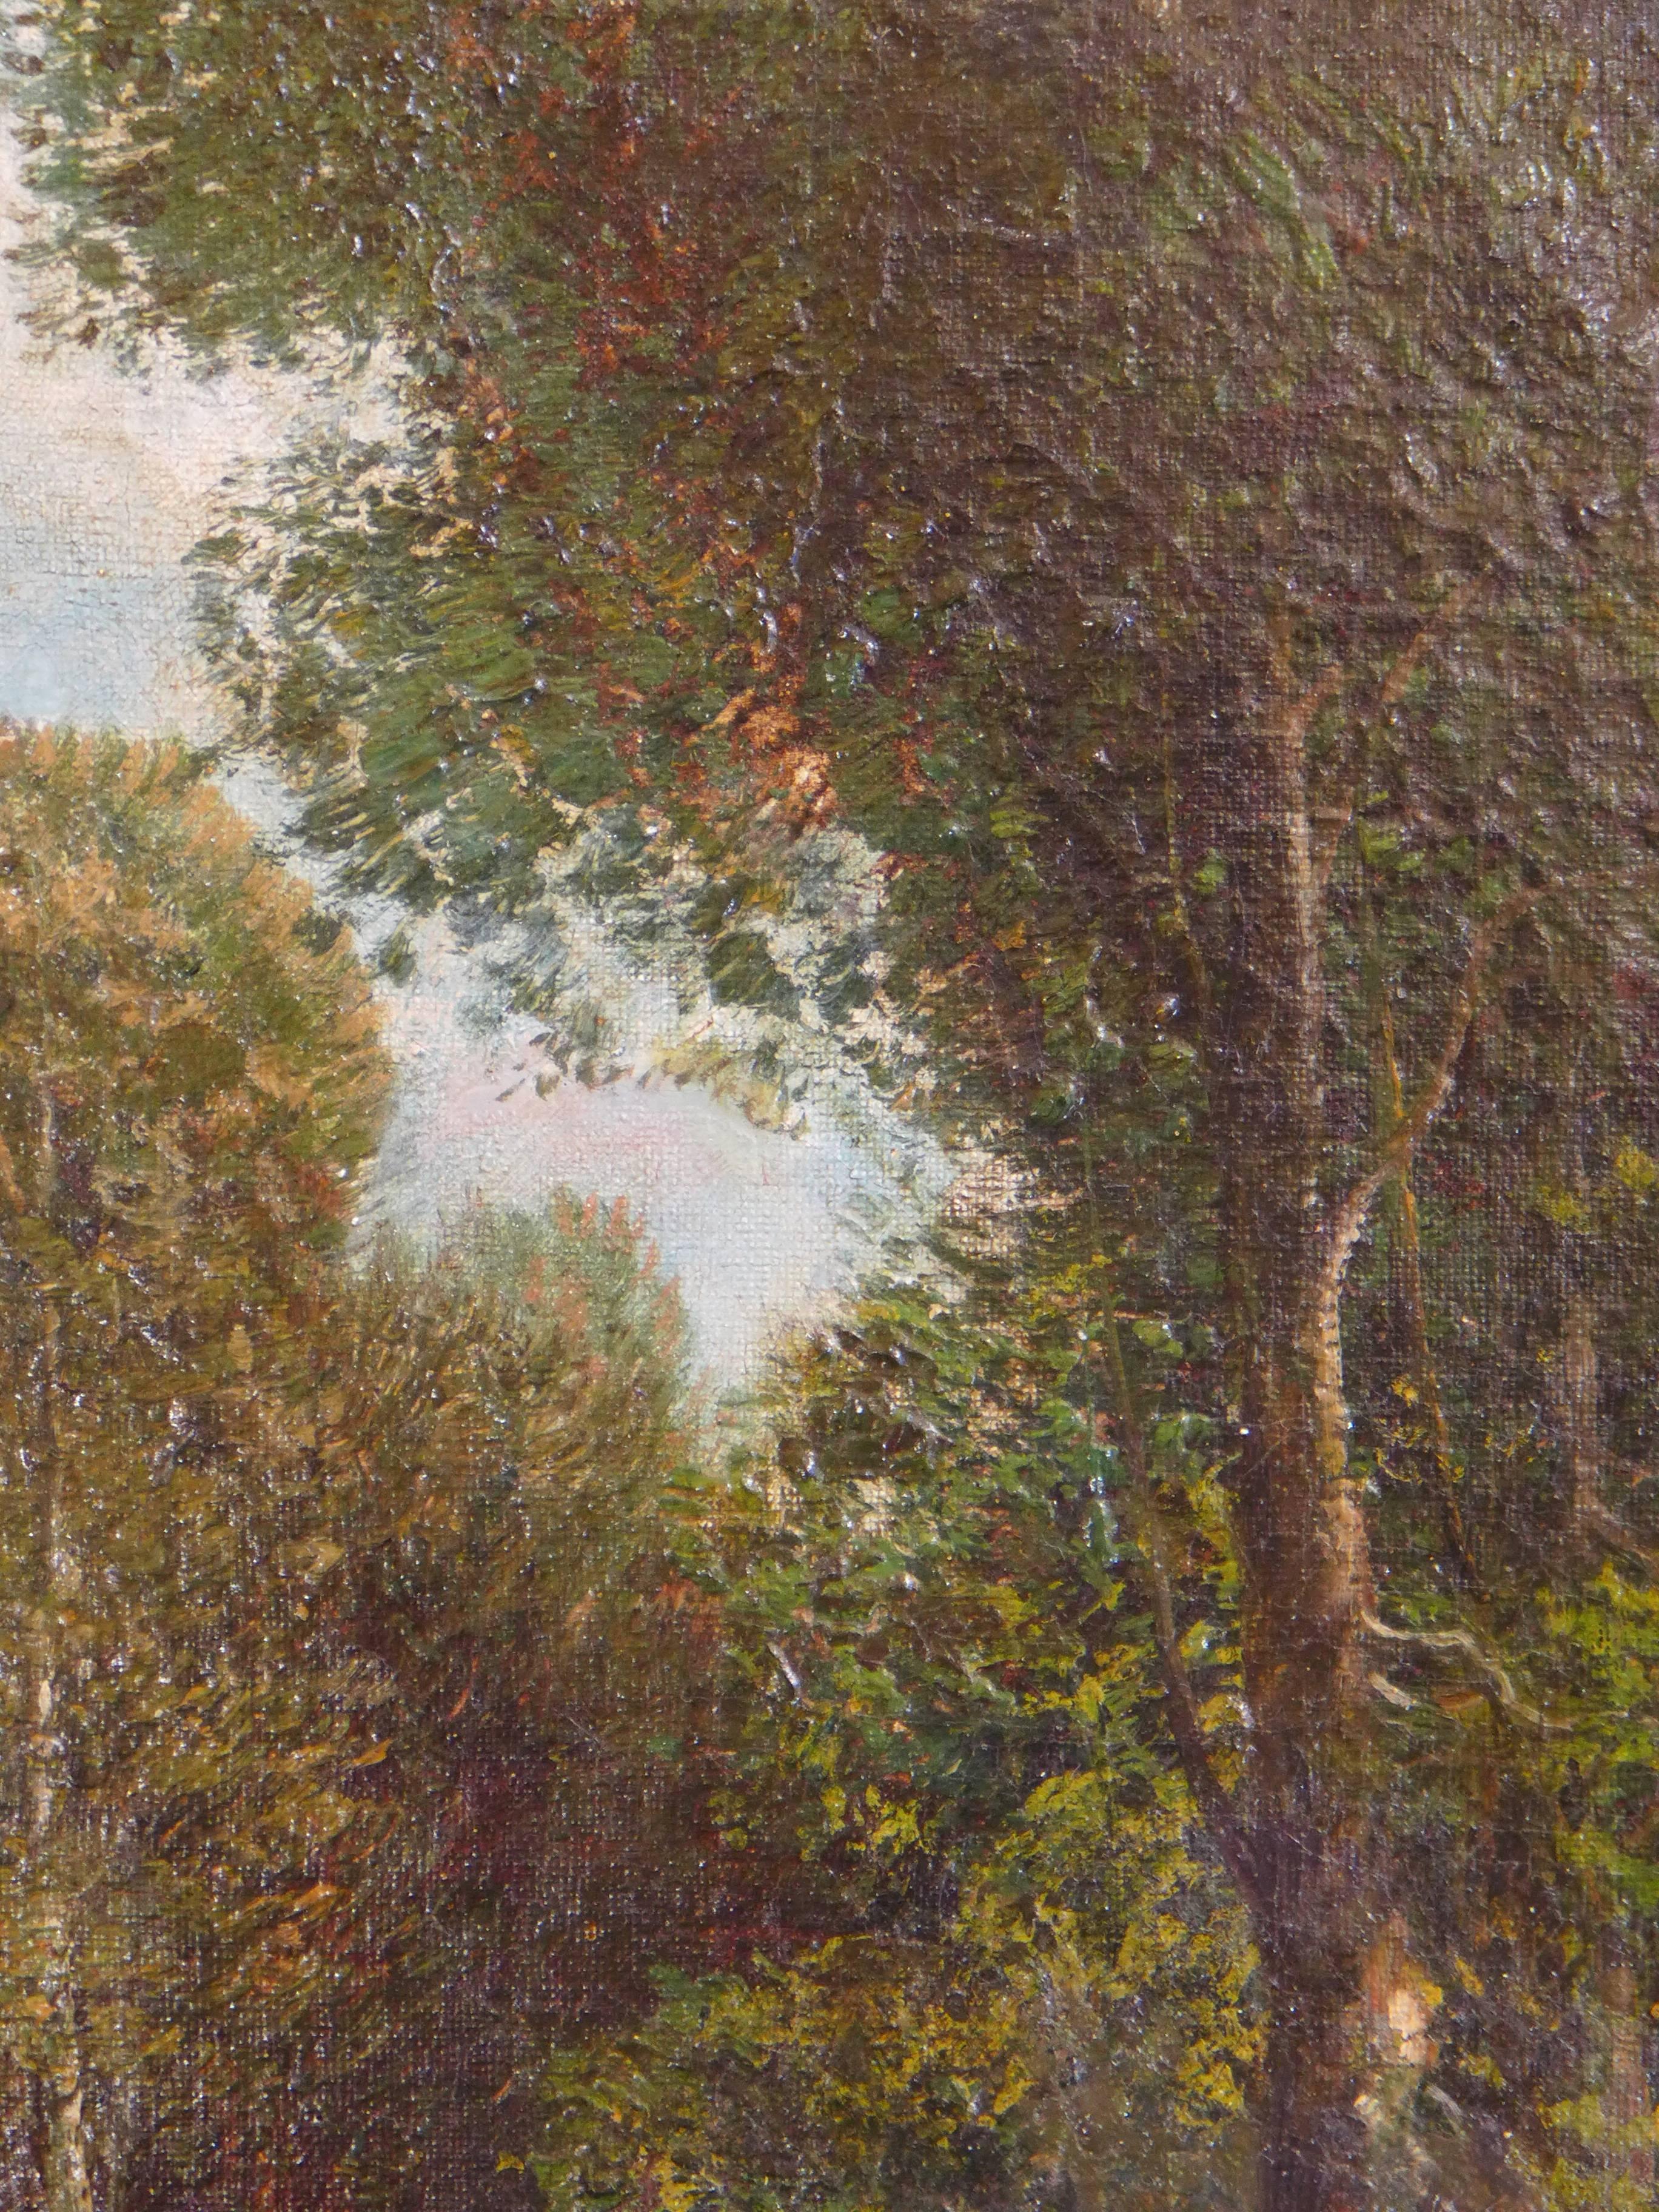 Oiled Oil on Canvas, circa 1860 Barbizon School ‘Rural Landscape’ Sign